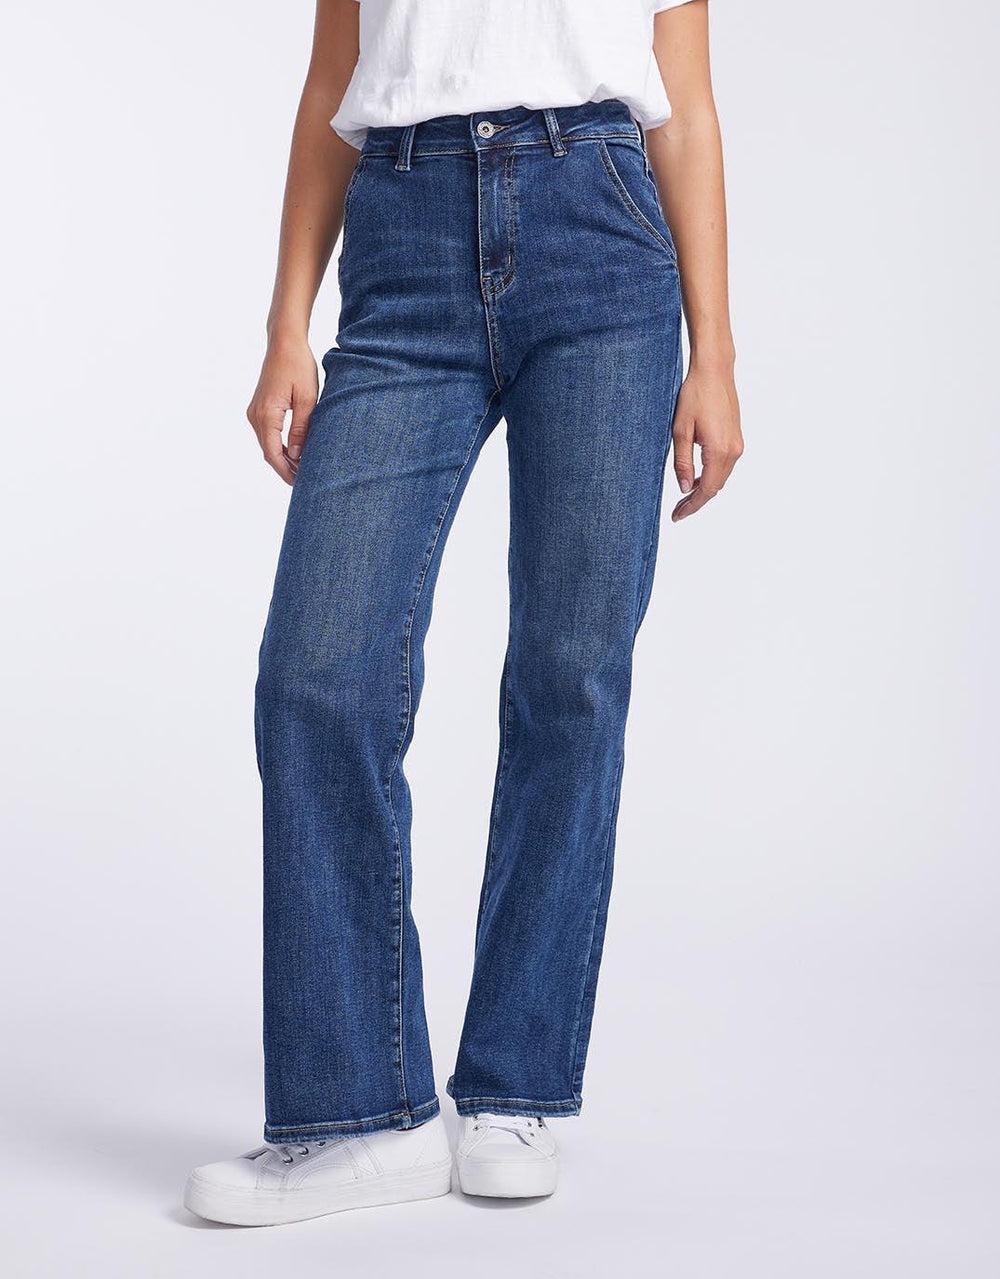 Buy Stretch Mom Jeans - White Country Denim for Sale Online Australia |  White & Co.